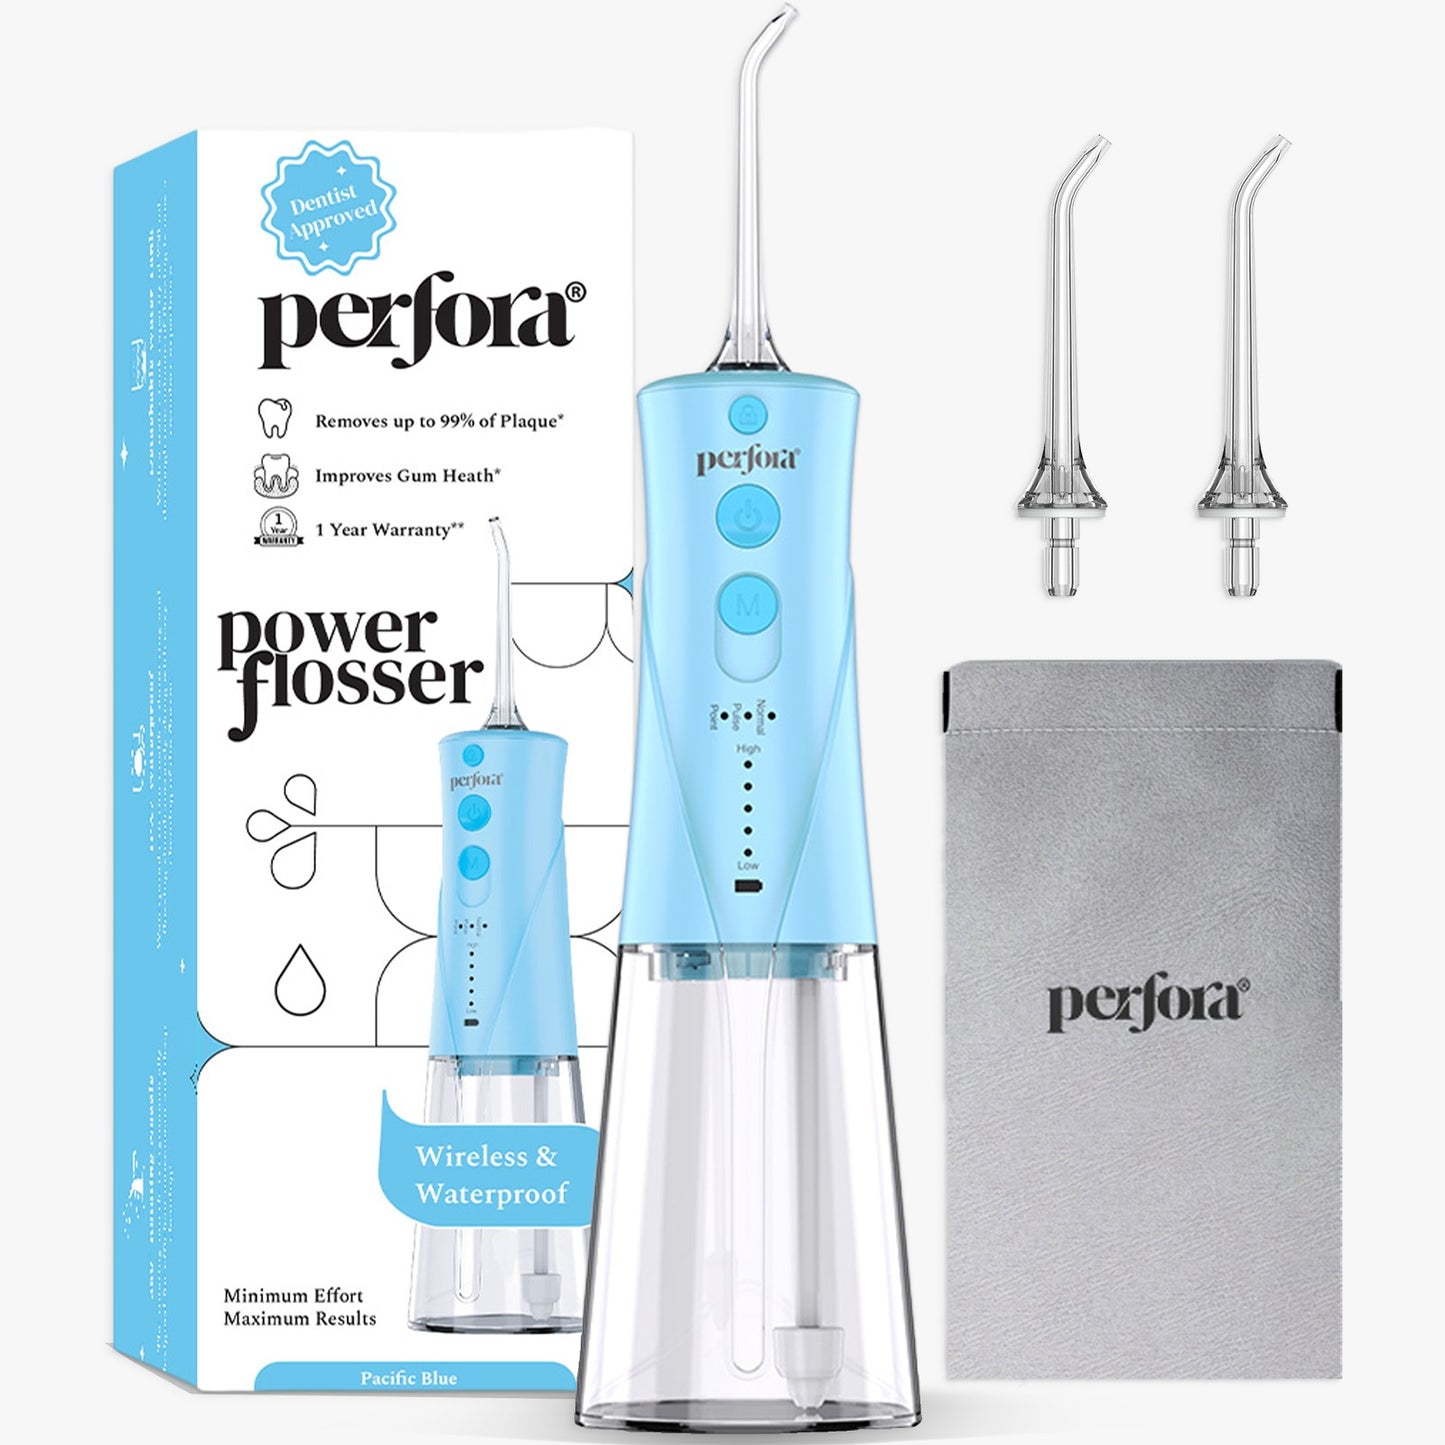 Perfora's Power Flosser for better oral health